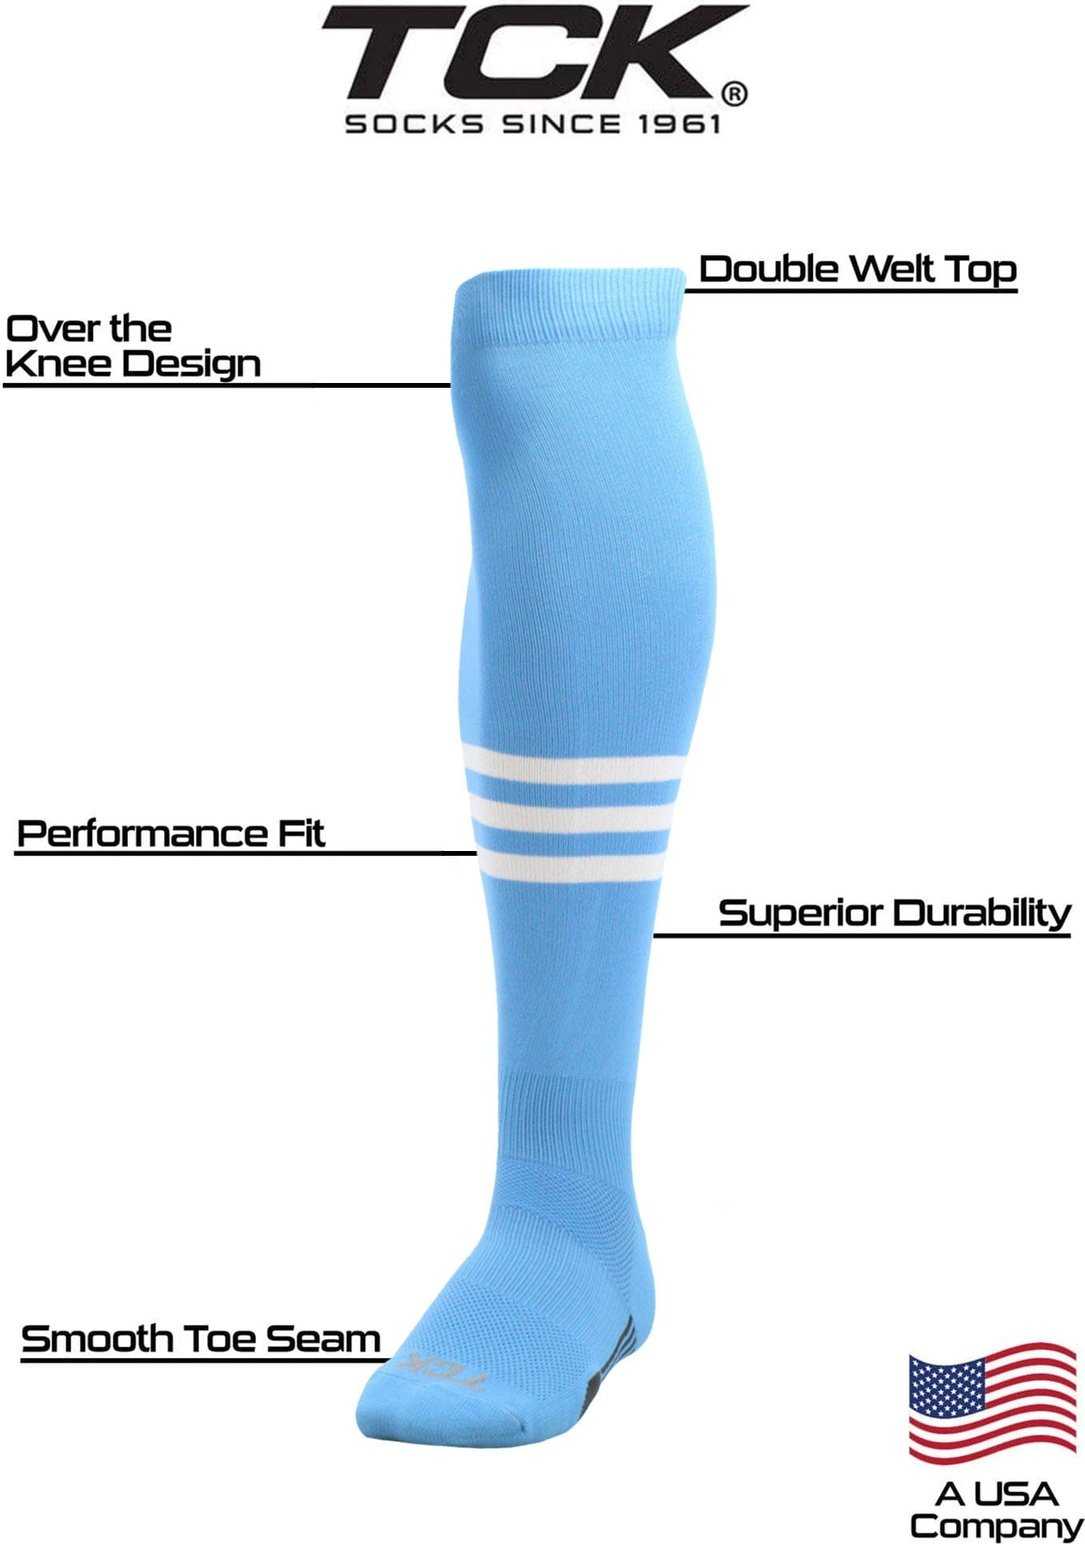 TCK Dugout Striped Over the Knee Baseball Socks - Columbia Blue White - HIT a Double